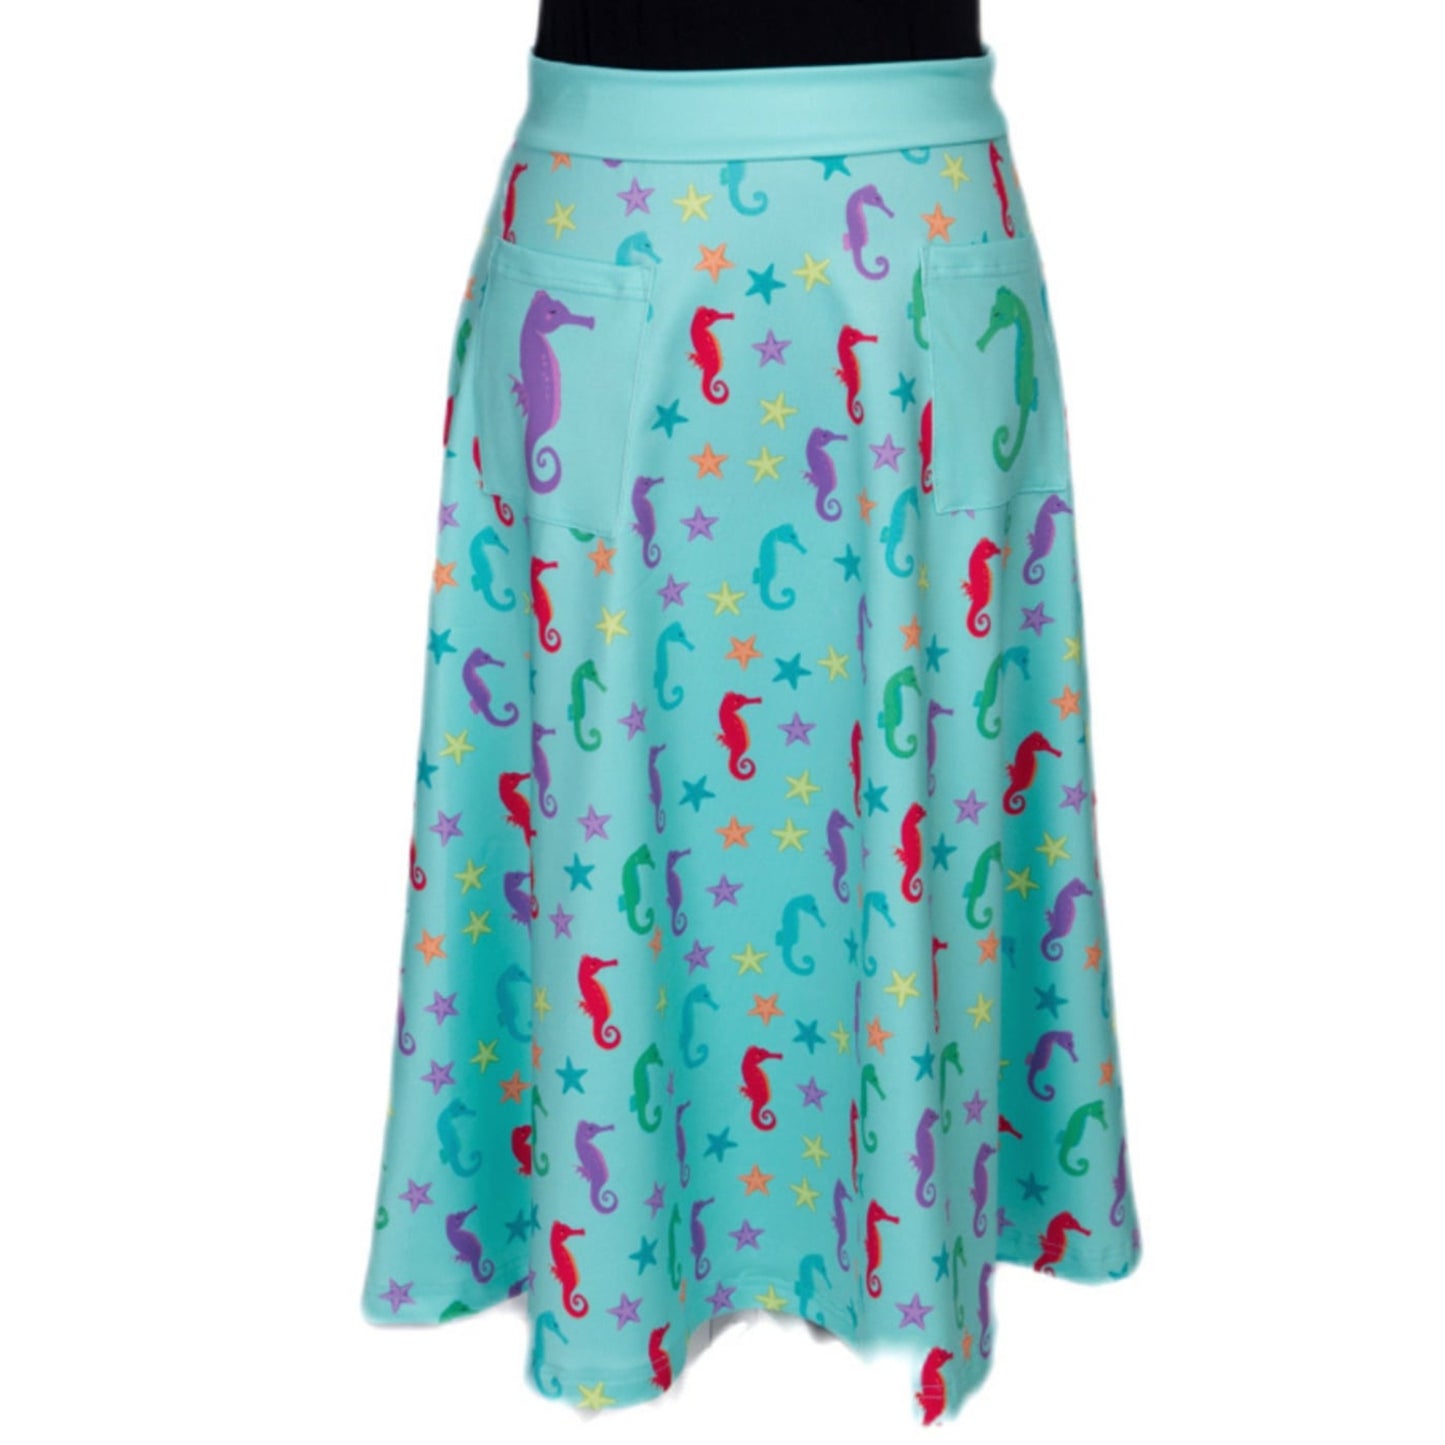 Oceania Original Skirt by RainbowsAndFairies.com.au (Seahorse - Starfish - Under The Sea - Kitsch - Aline Skirt With Pockets - Vintage Inspired) - SKU: CL_OSKRT_OCEAN_ORG - Pic-02